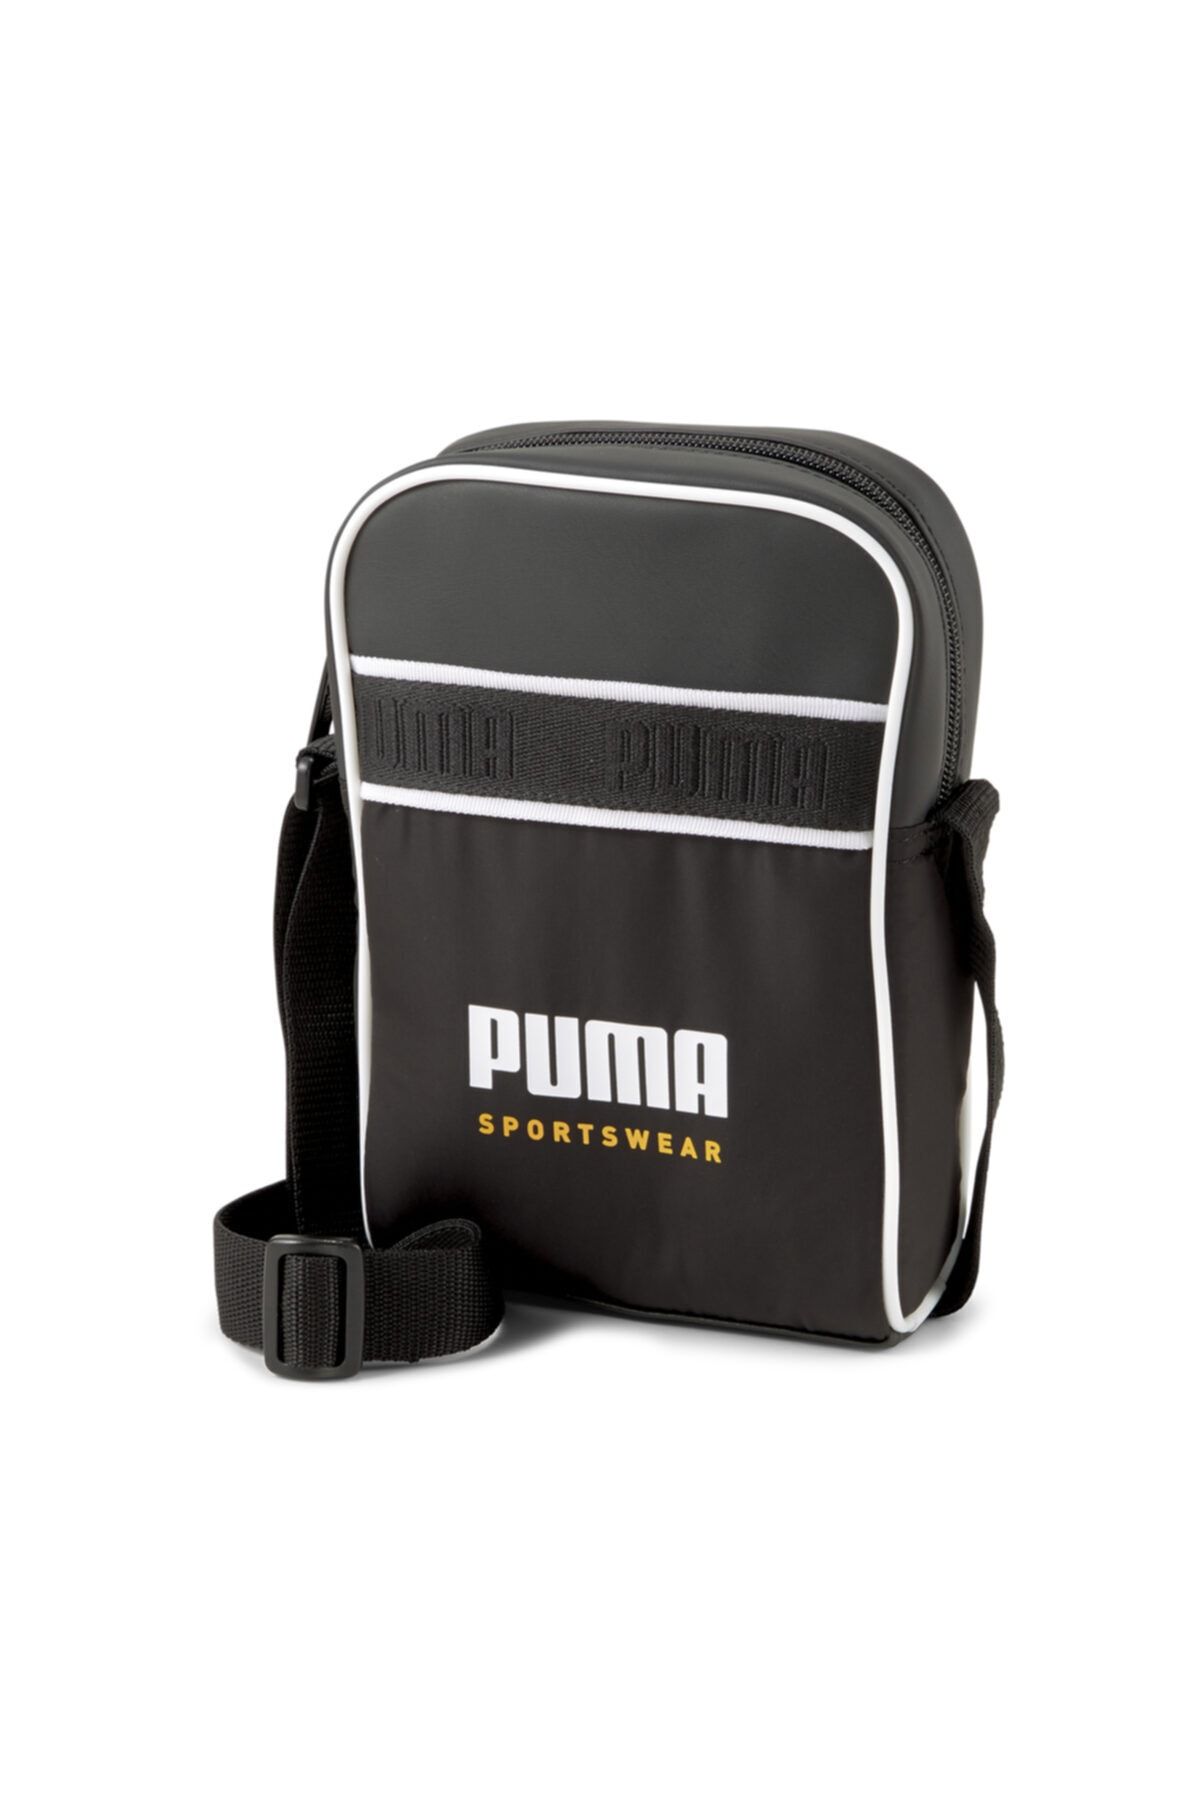 Puma Puma Kadın Çanta Campus Compact Portable - Siyah